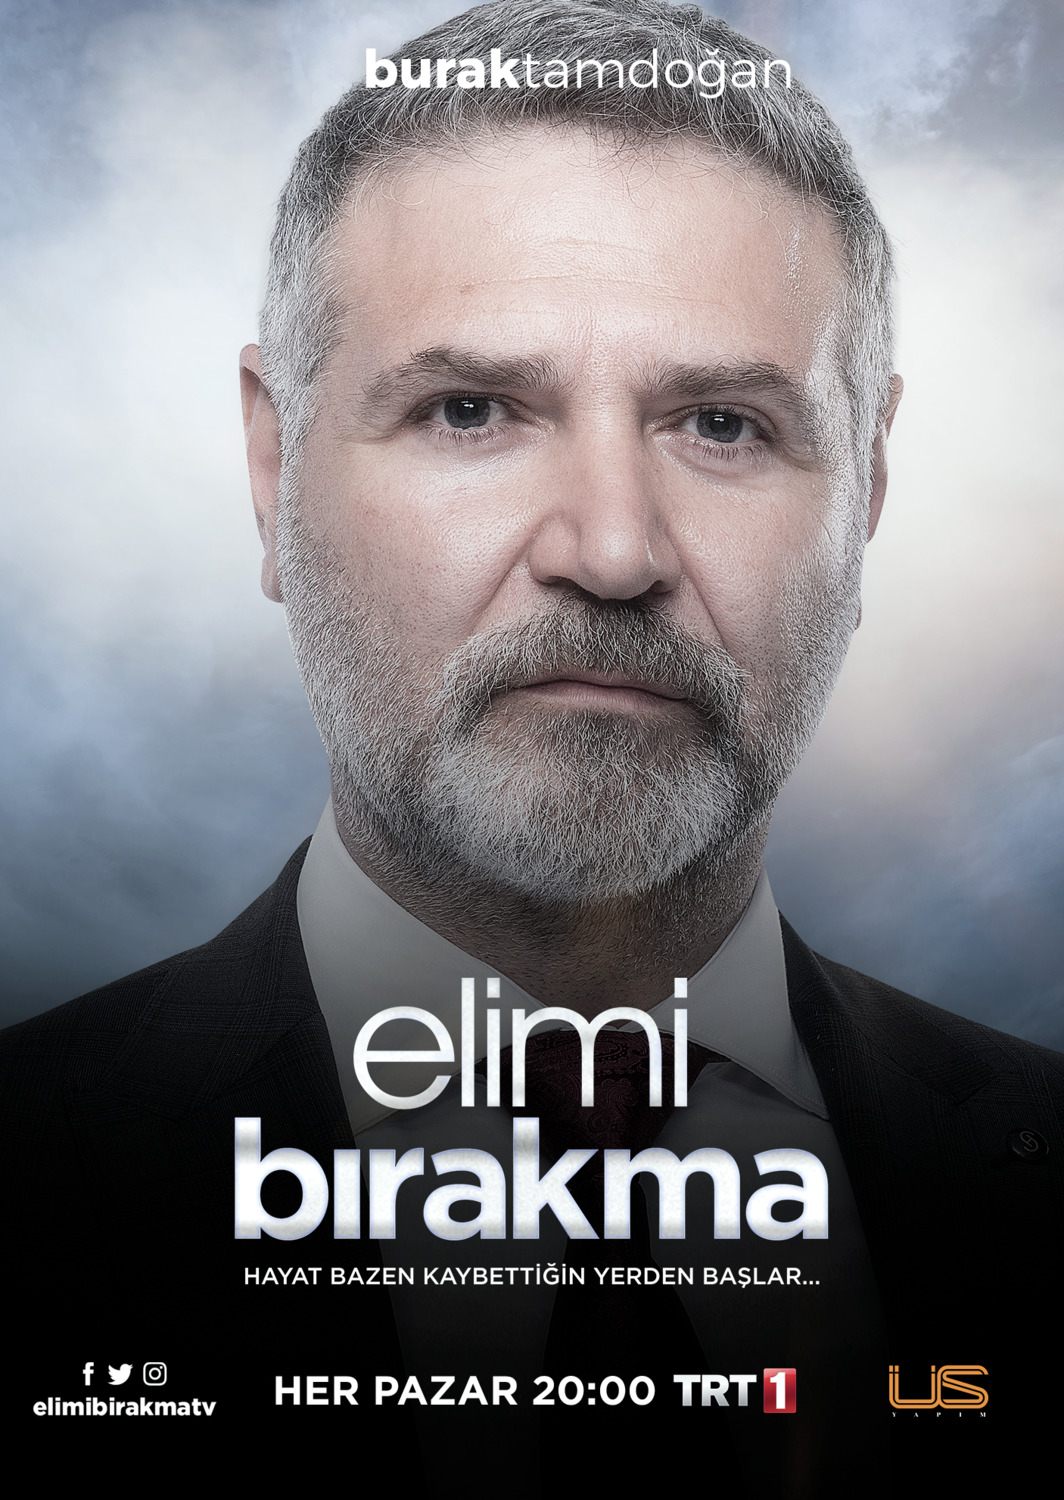 Extra Large TV Poster Image for Elimi birakma (#18 of 20)